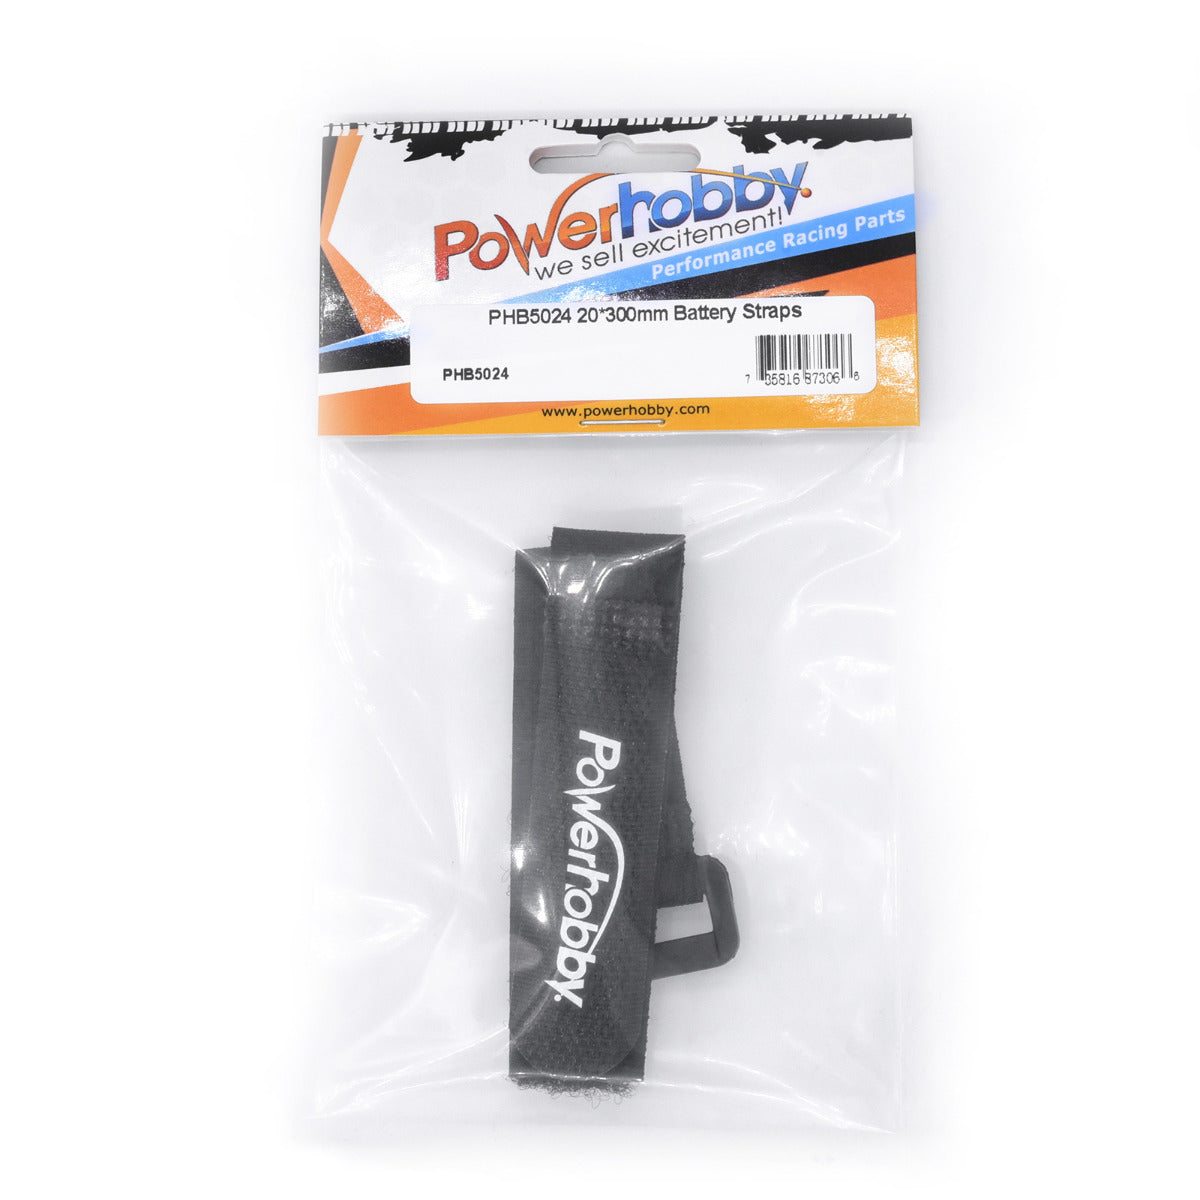 Powerhobby 20*300mm Battery Straps - PowerHobby